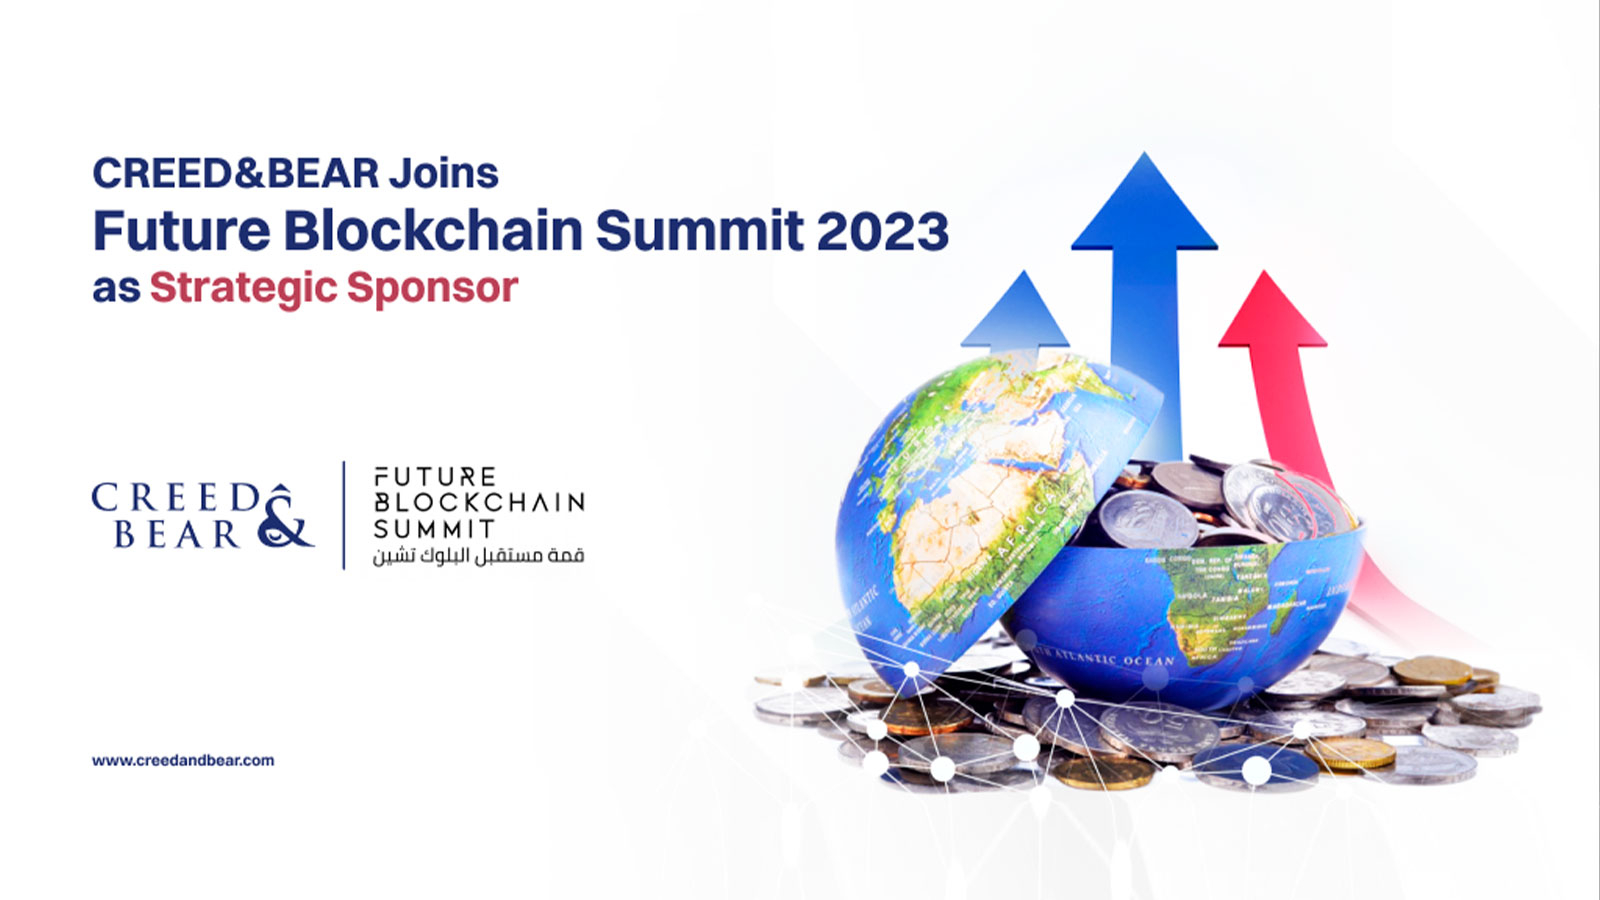 CREED&BEAR Joins Future Blockchain Summit 2023 as Strategic Sponsor